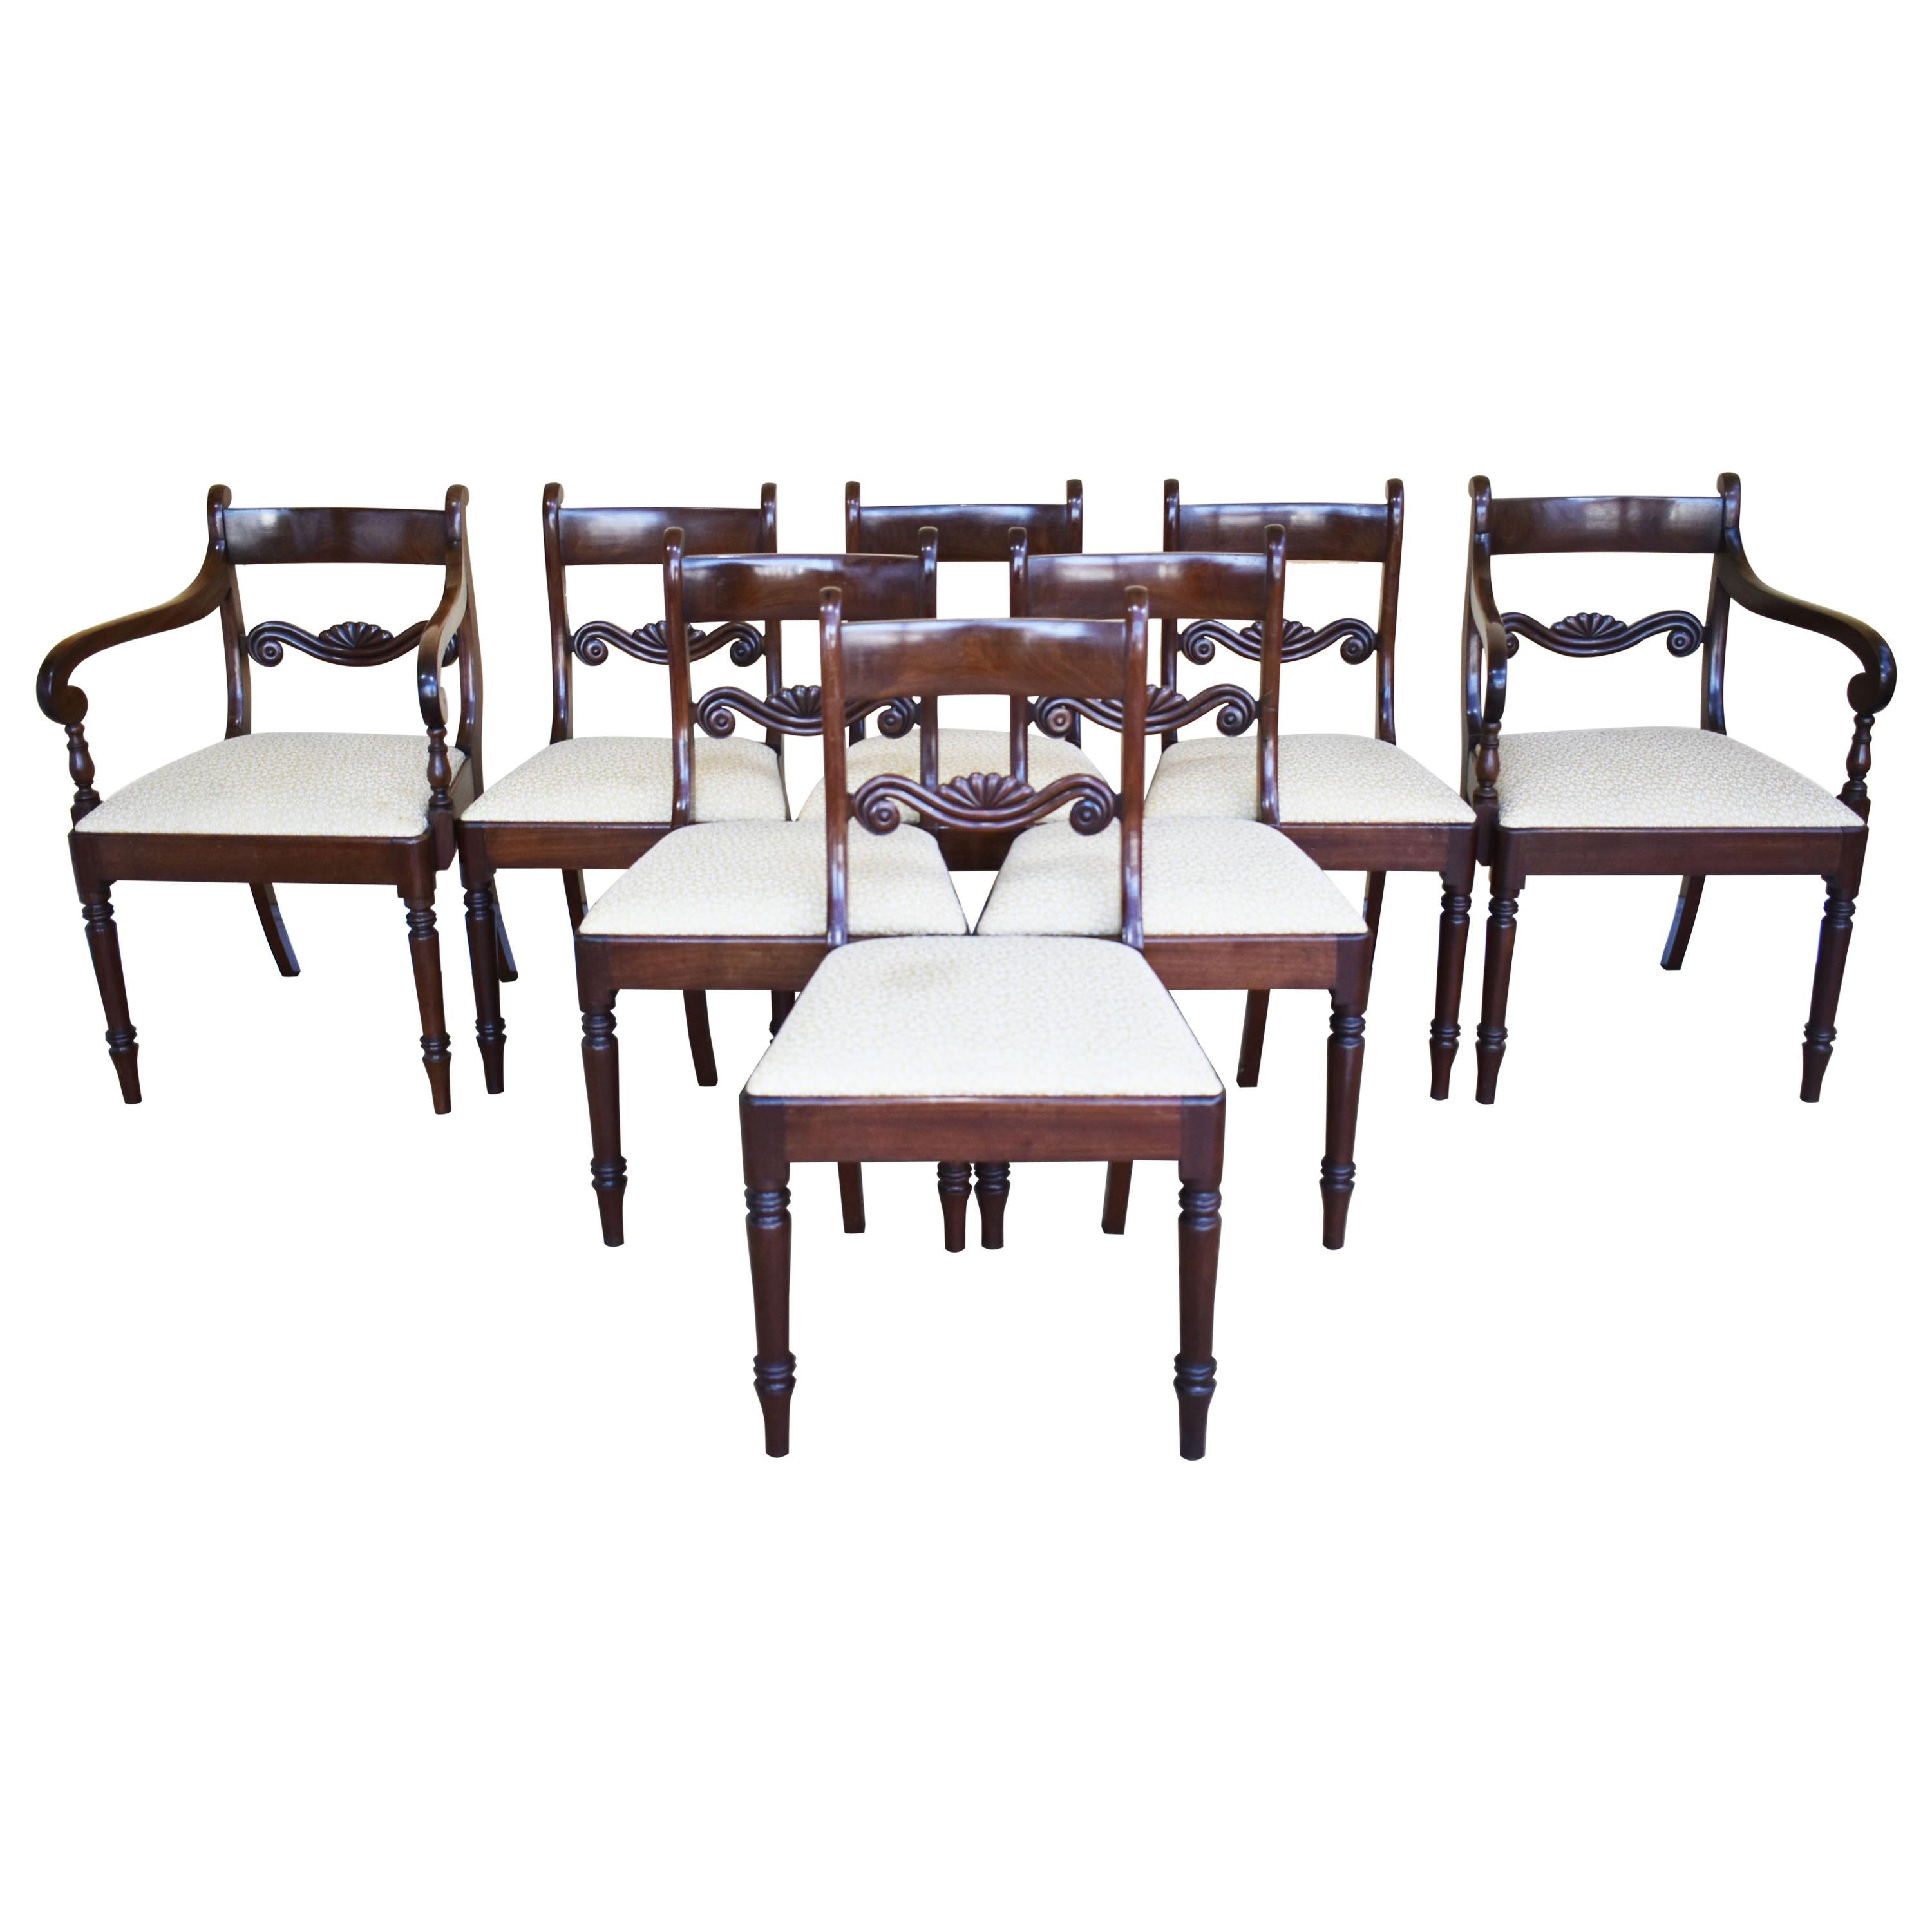 Set of 8 Mahogany Dining Chairs, 19th Century